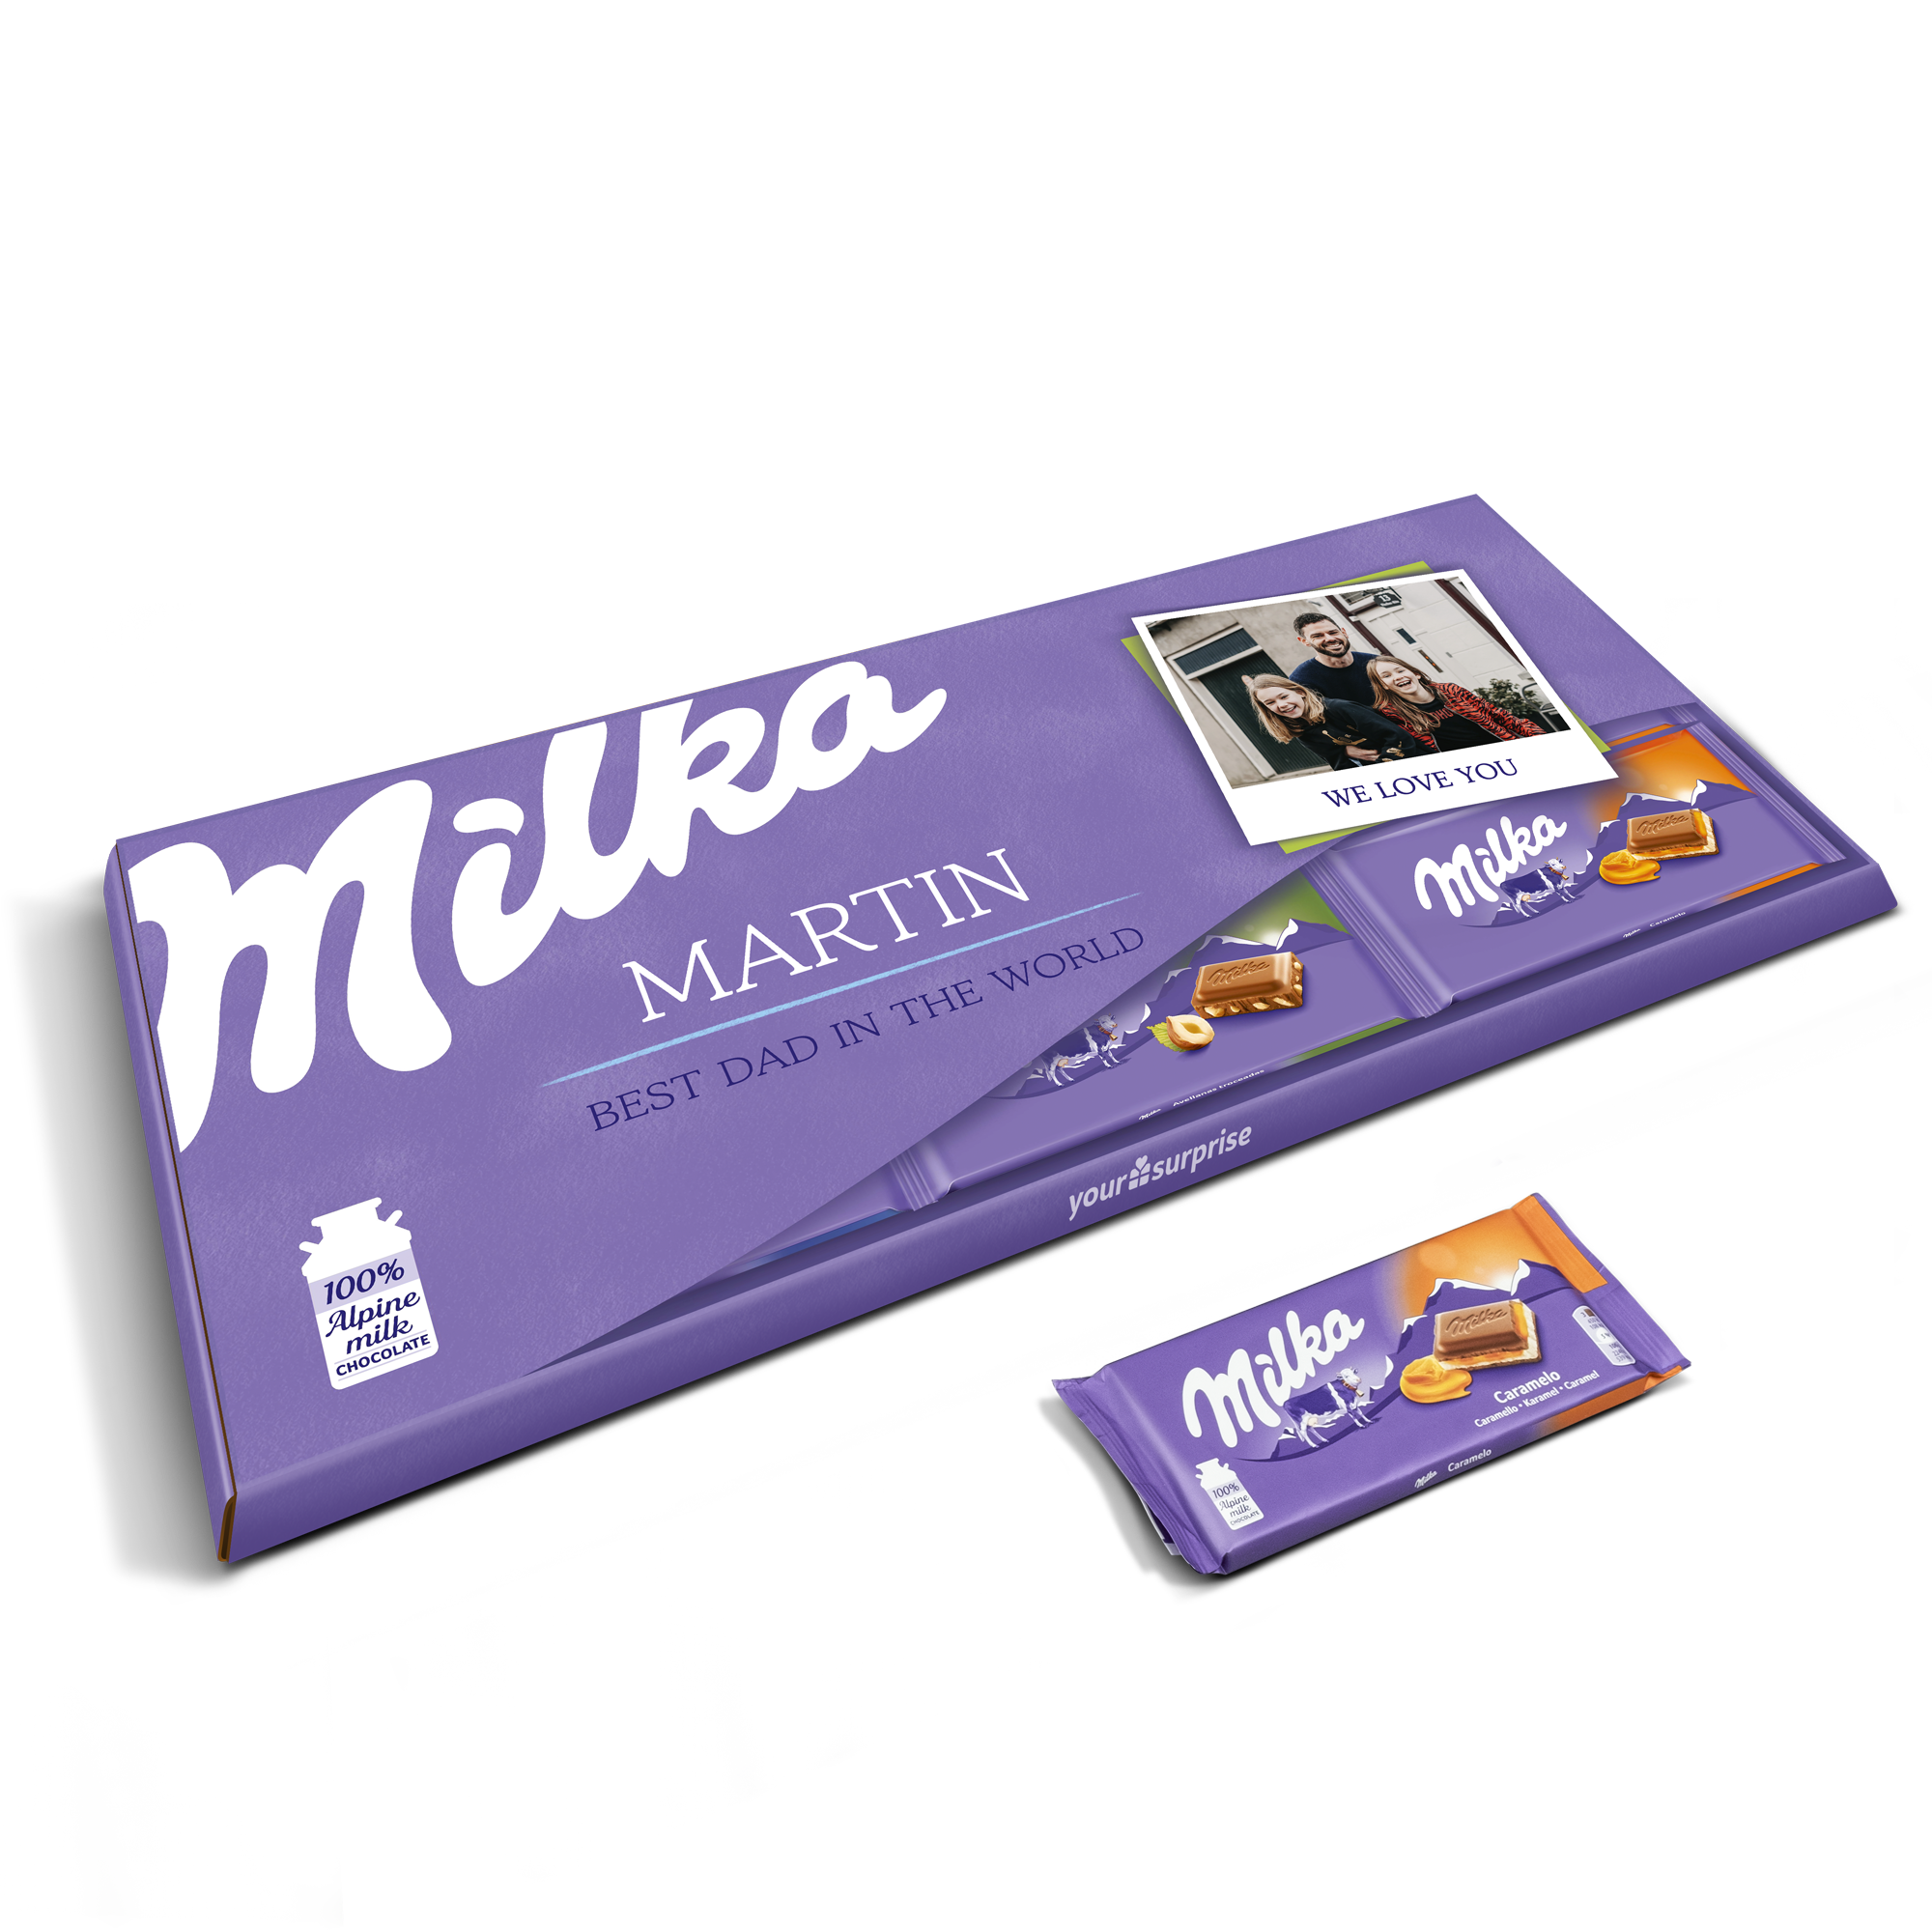 XXL personalizirana čokoladica Milka - 900 gramov